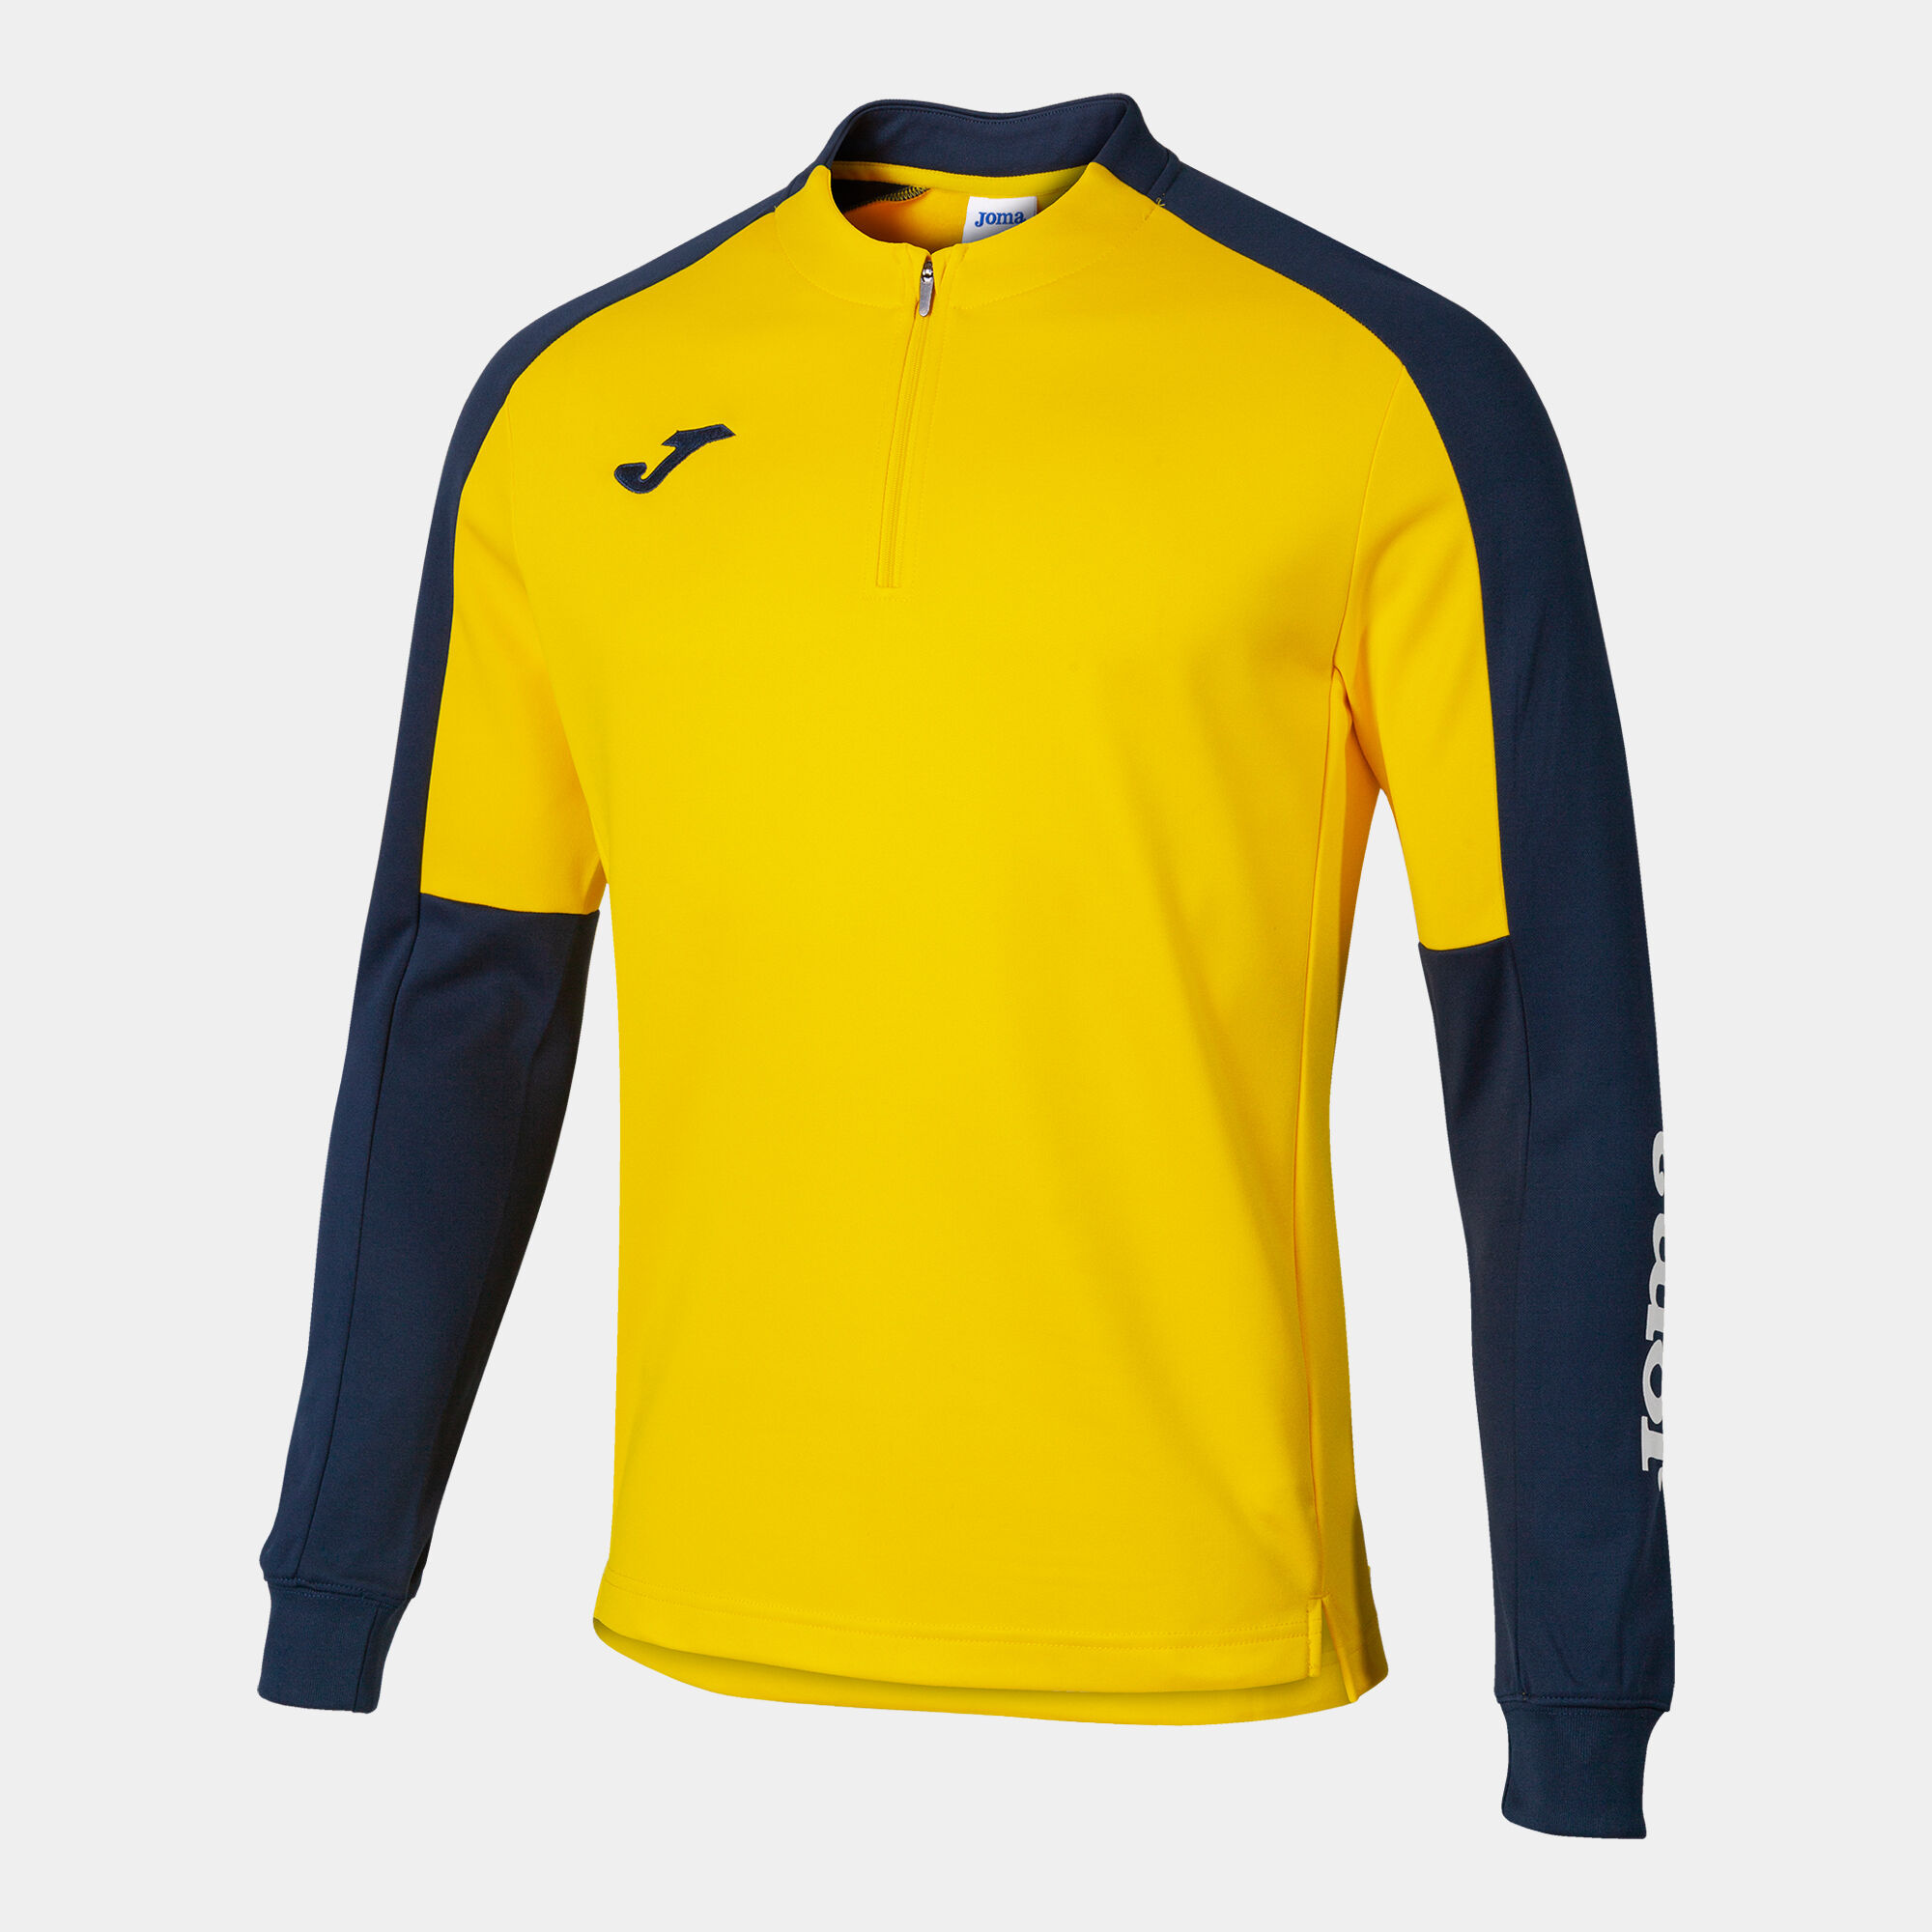 Sweatshirt man Eco Championship yellow navy blue